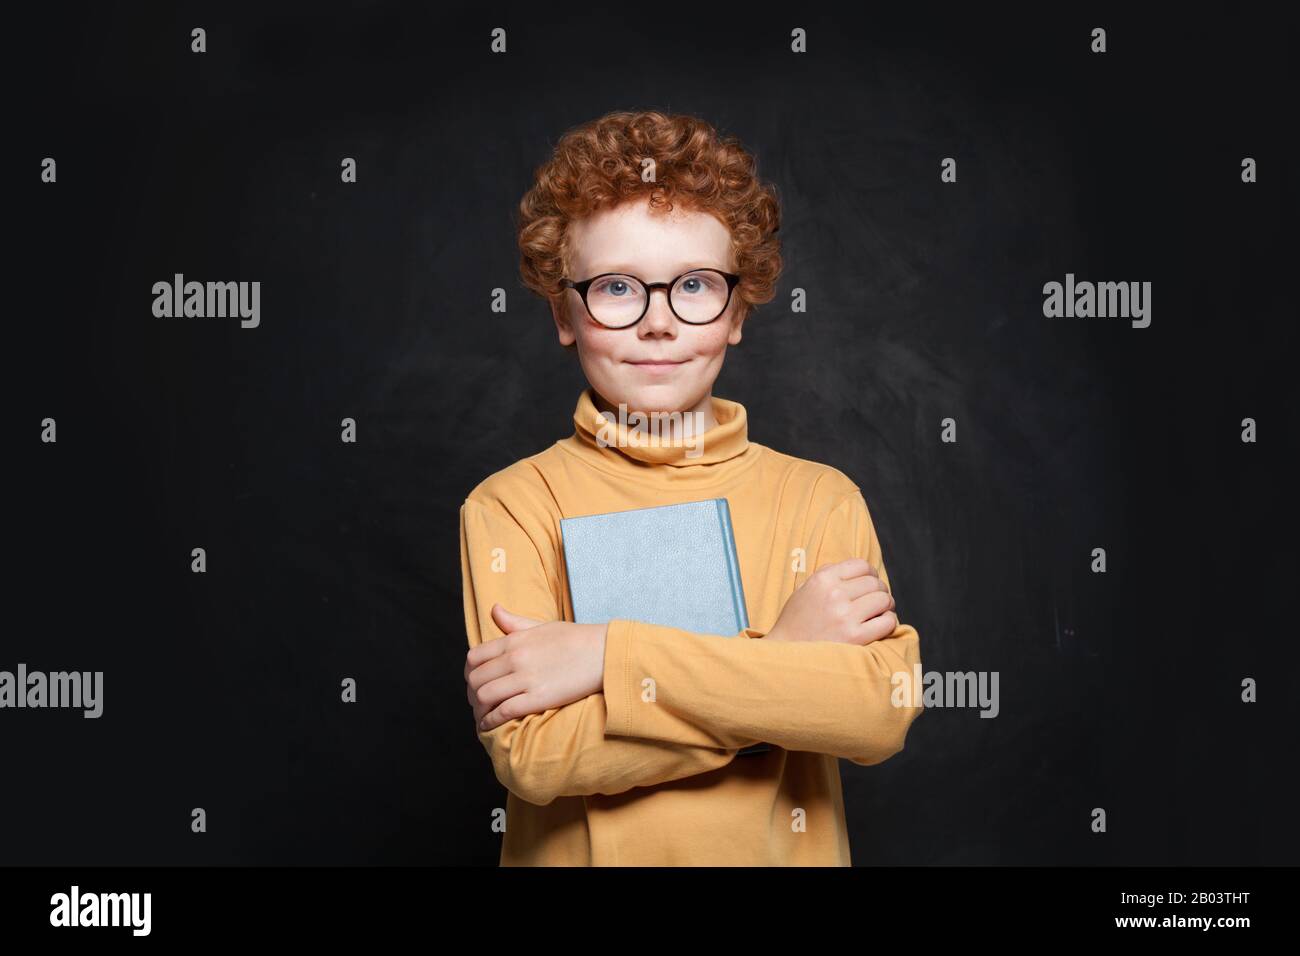 Portrait of school kid in glasses holding book Stock Photo